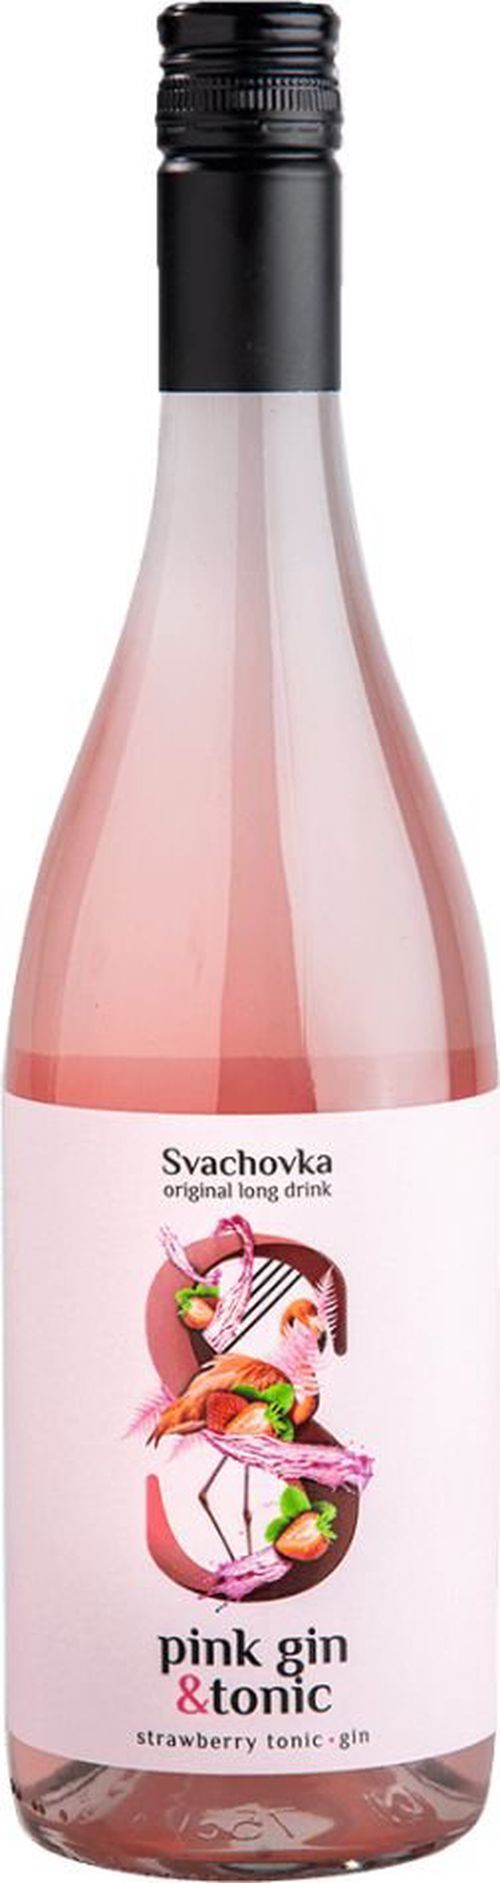 Pink Gin & Tonic Svachovka 0,75l 7,2%